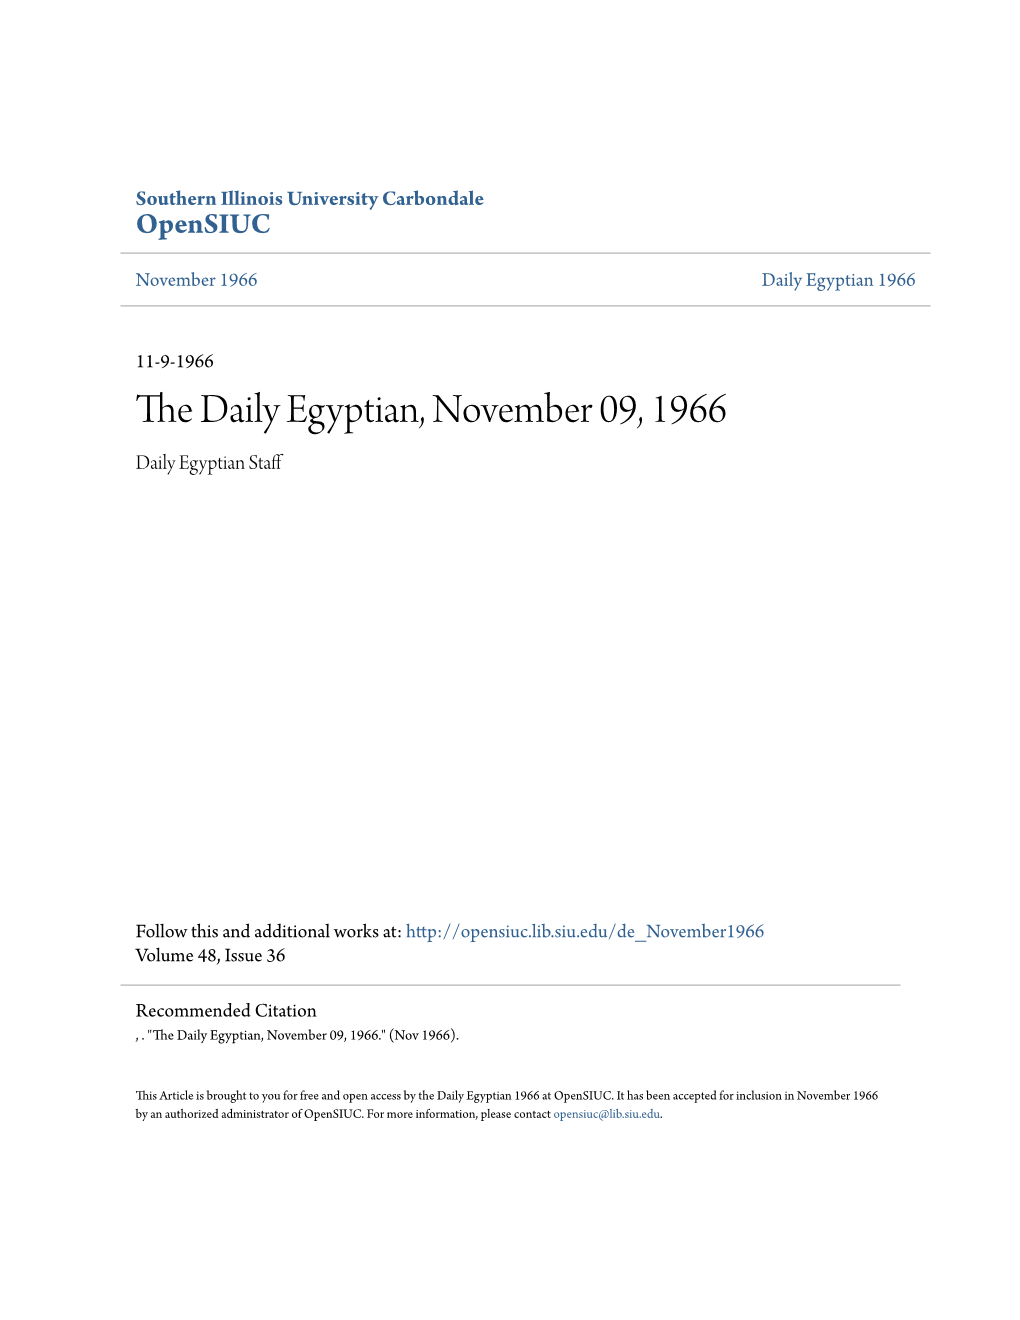 The Daily Egyptian, November 09, 1966